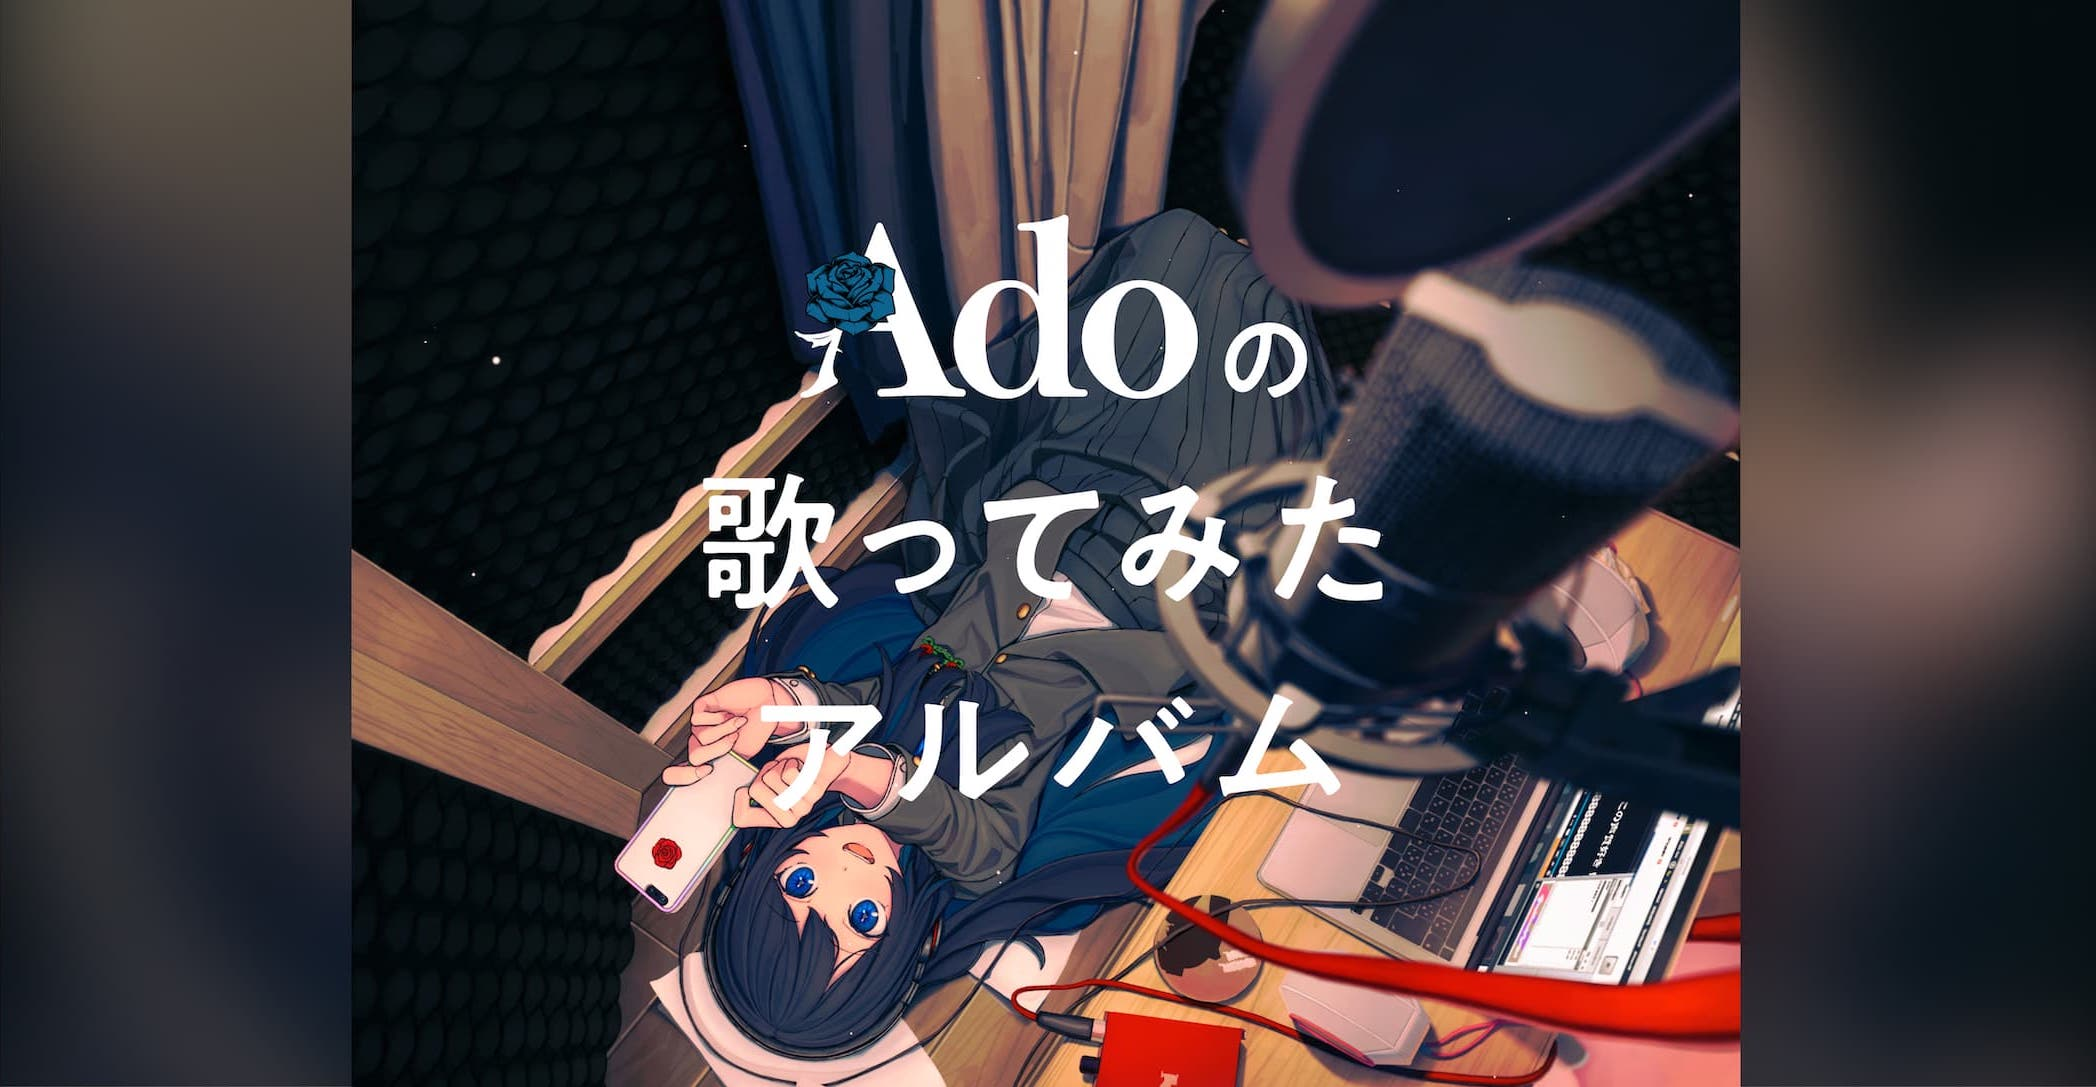 Ado Announces Release Date for Cover Album Featuring Unravel - Prepare to Be Amazed! 11